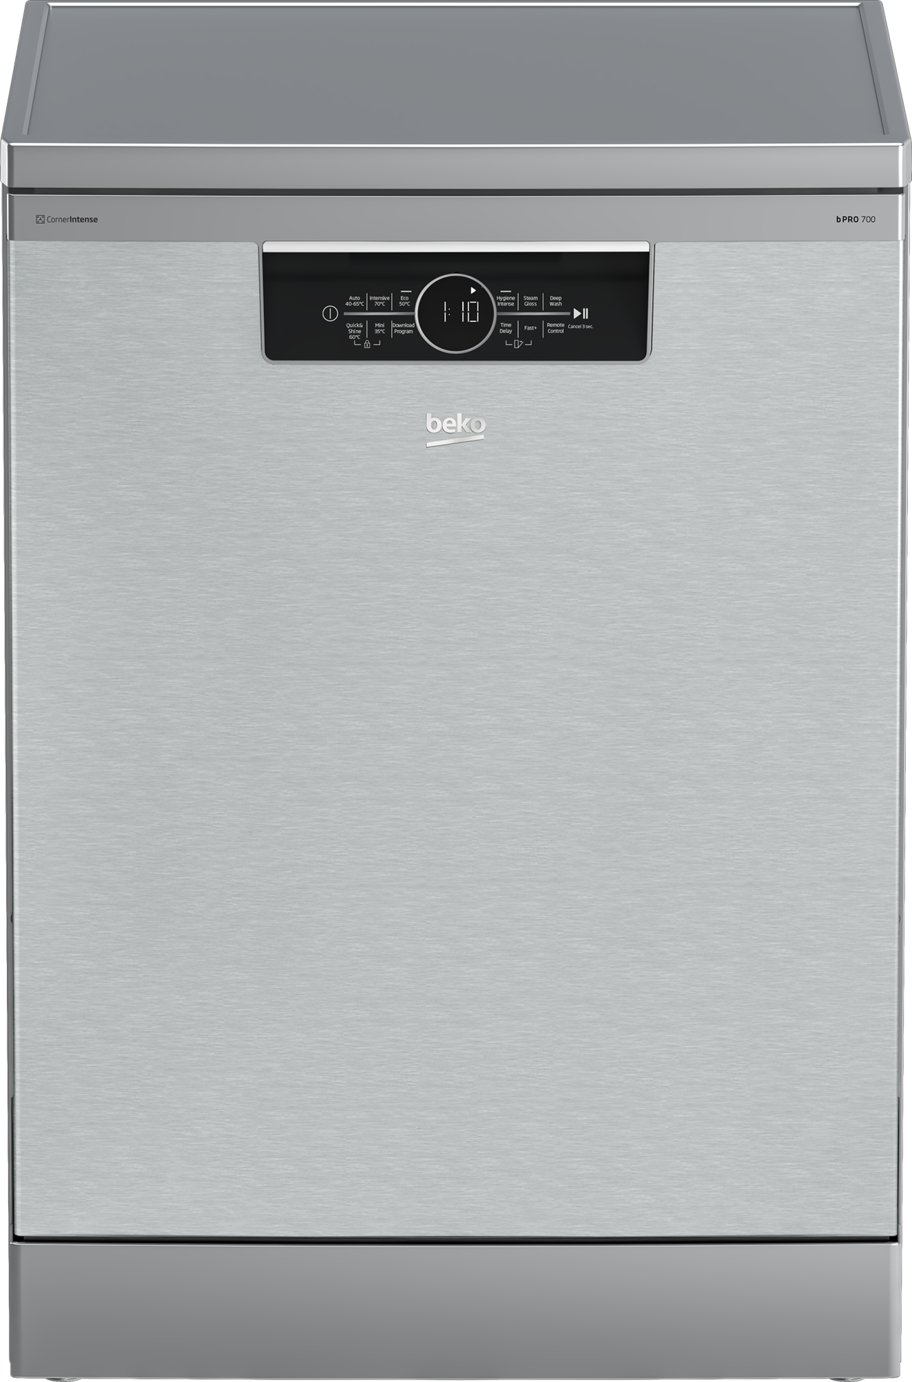 Beko BDFN36650CX Full Size Dishwasher - Stainless Steel